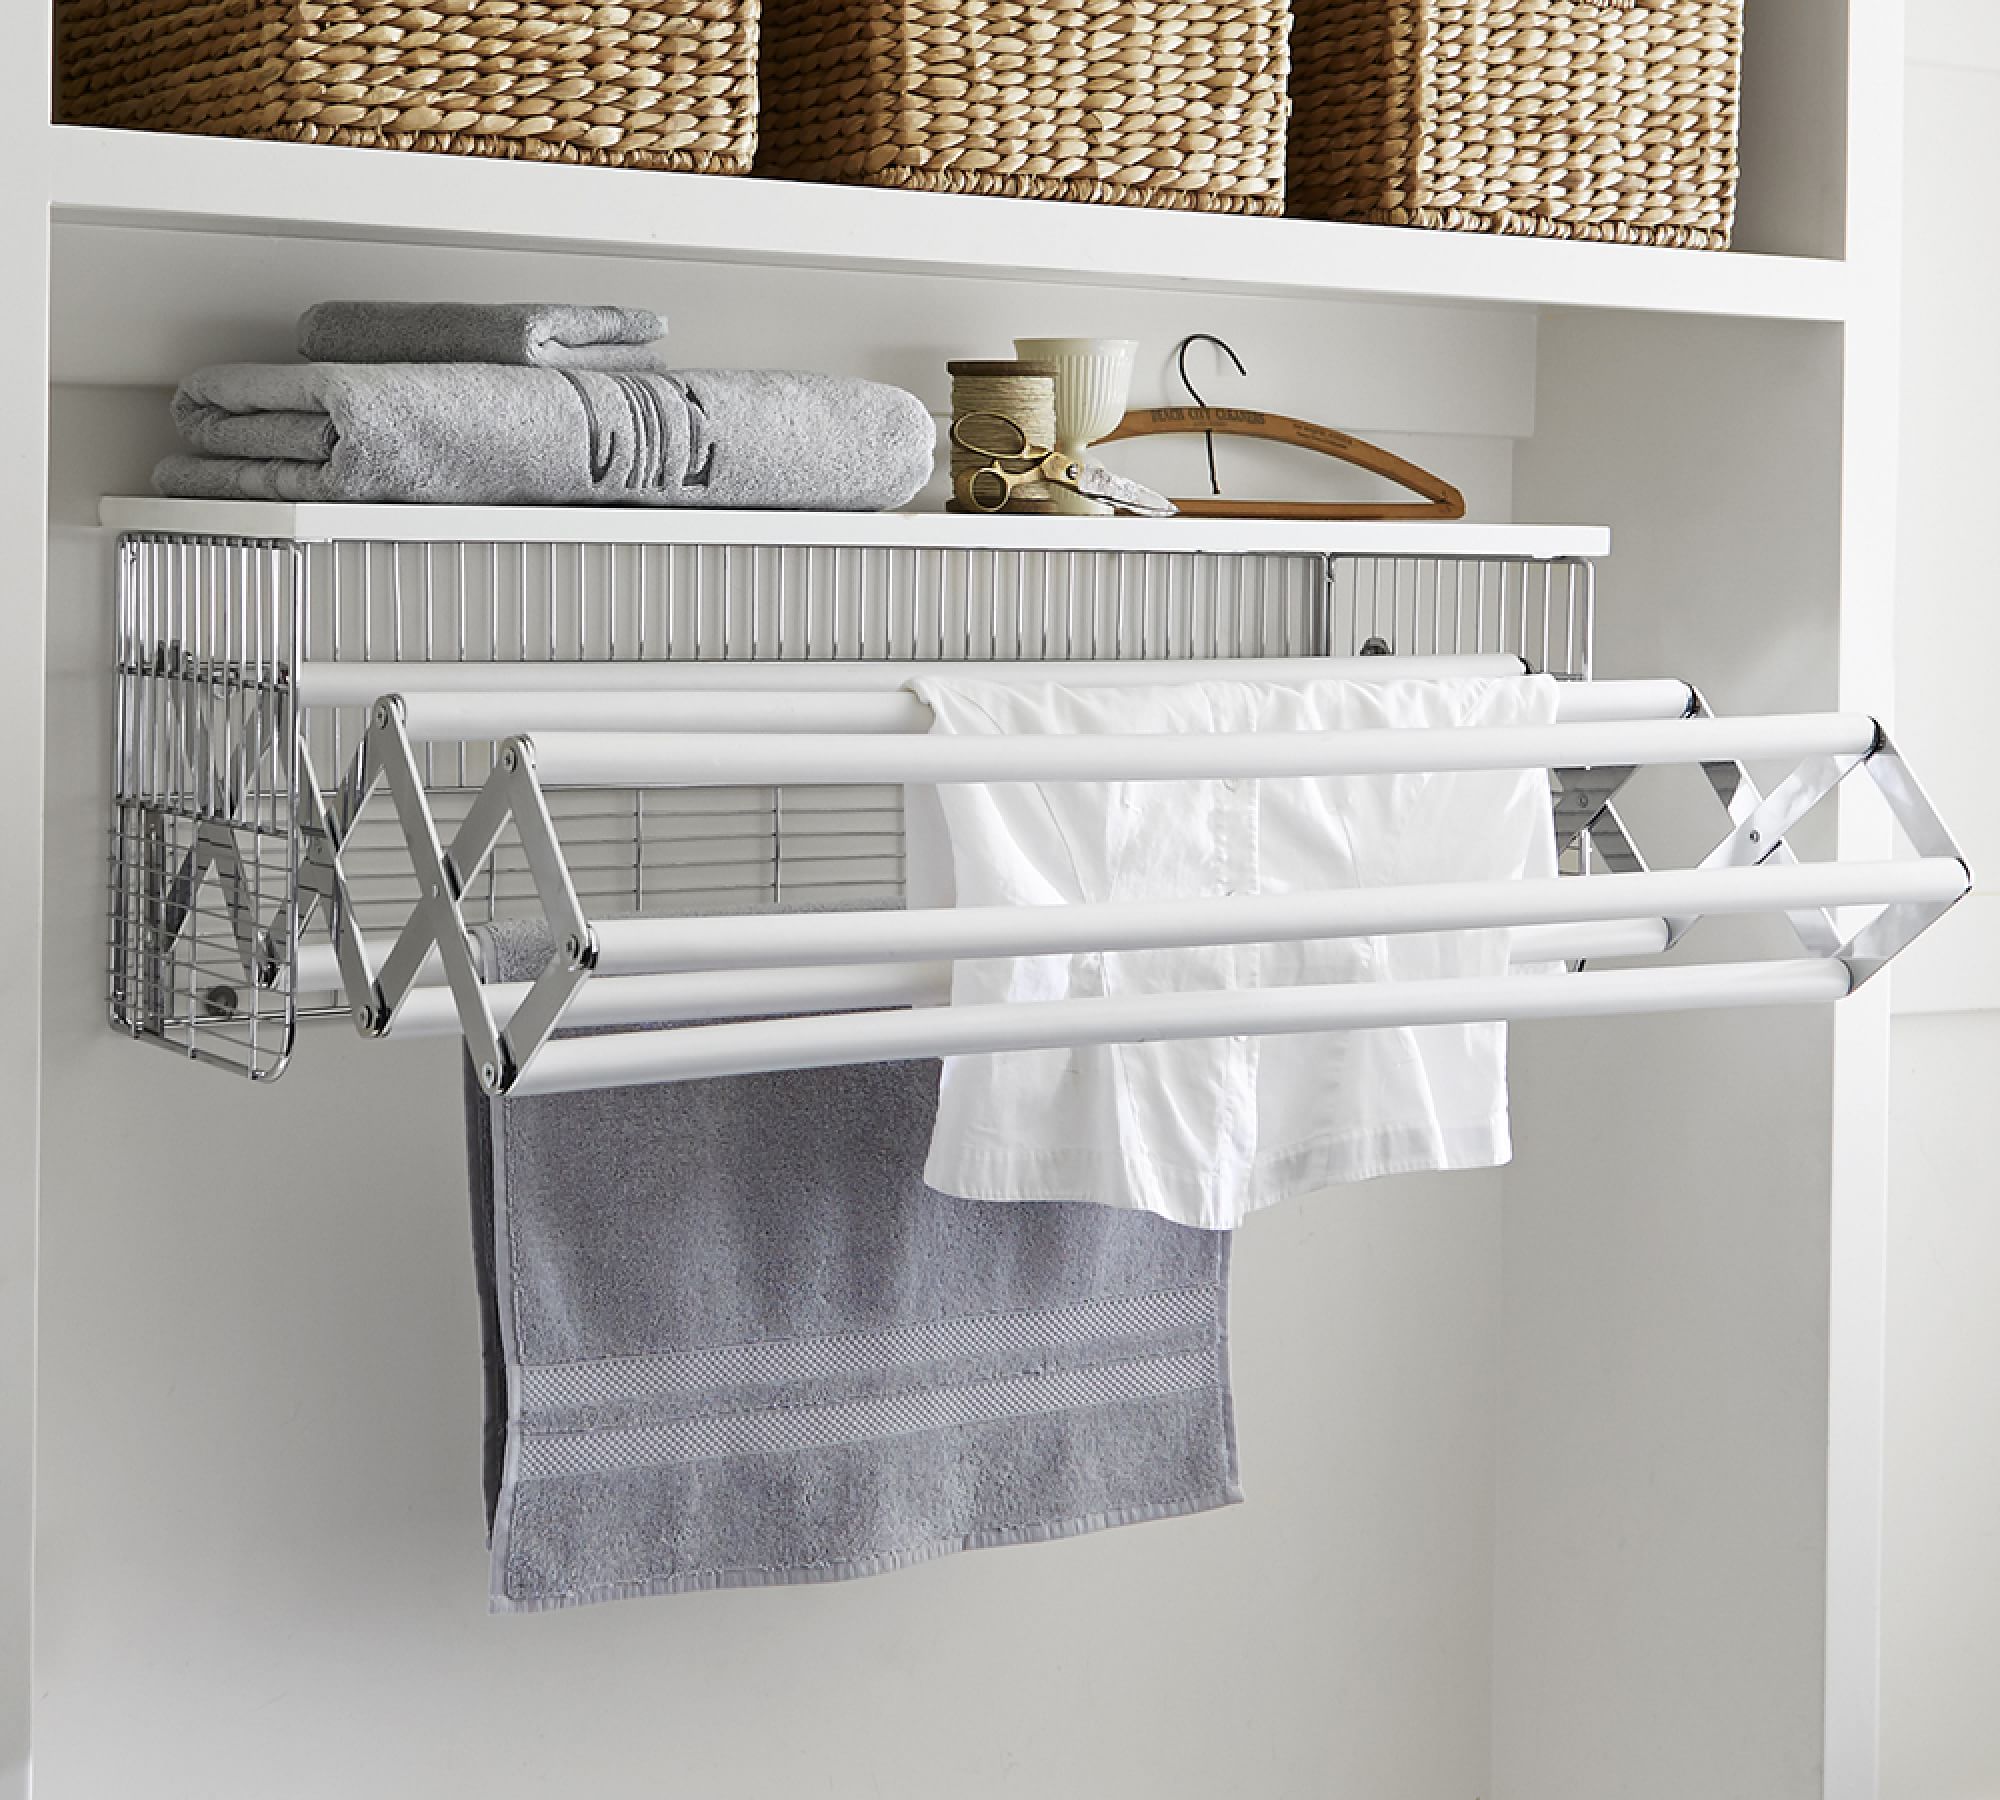 9 Best Hanging Racks for the Laundry Room